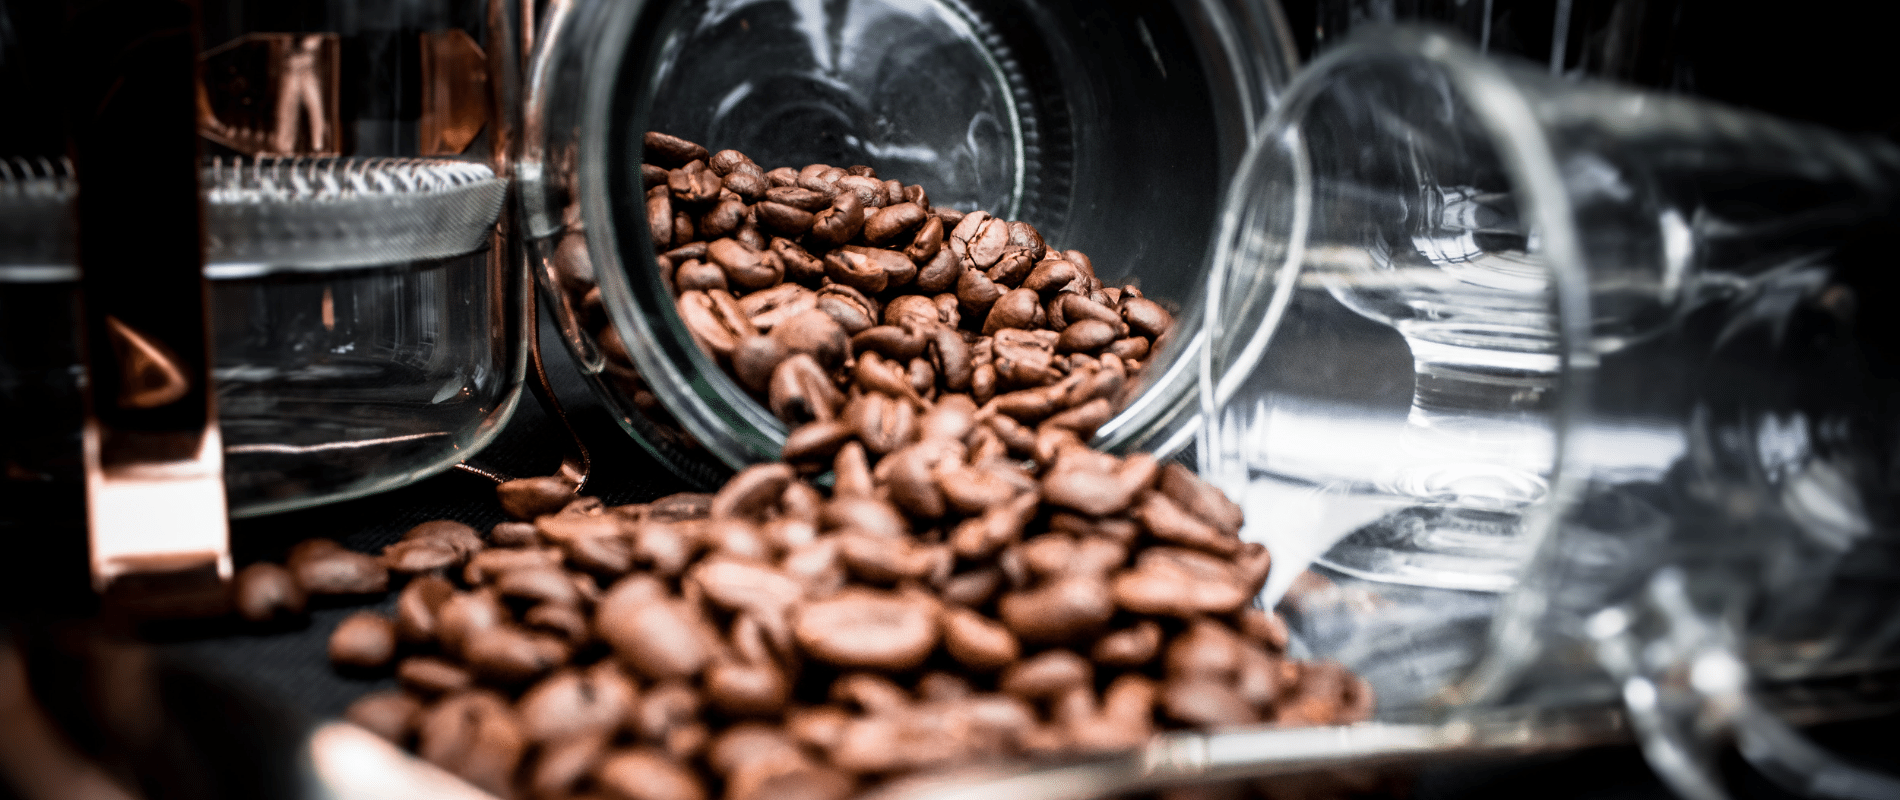 The Full Scoop On Acidity In Coffee